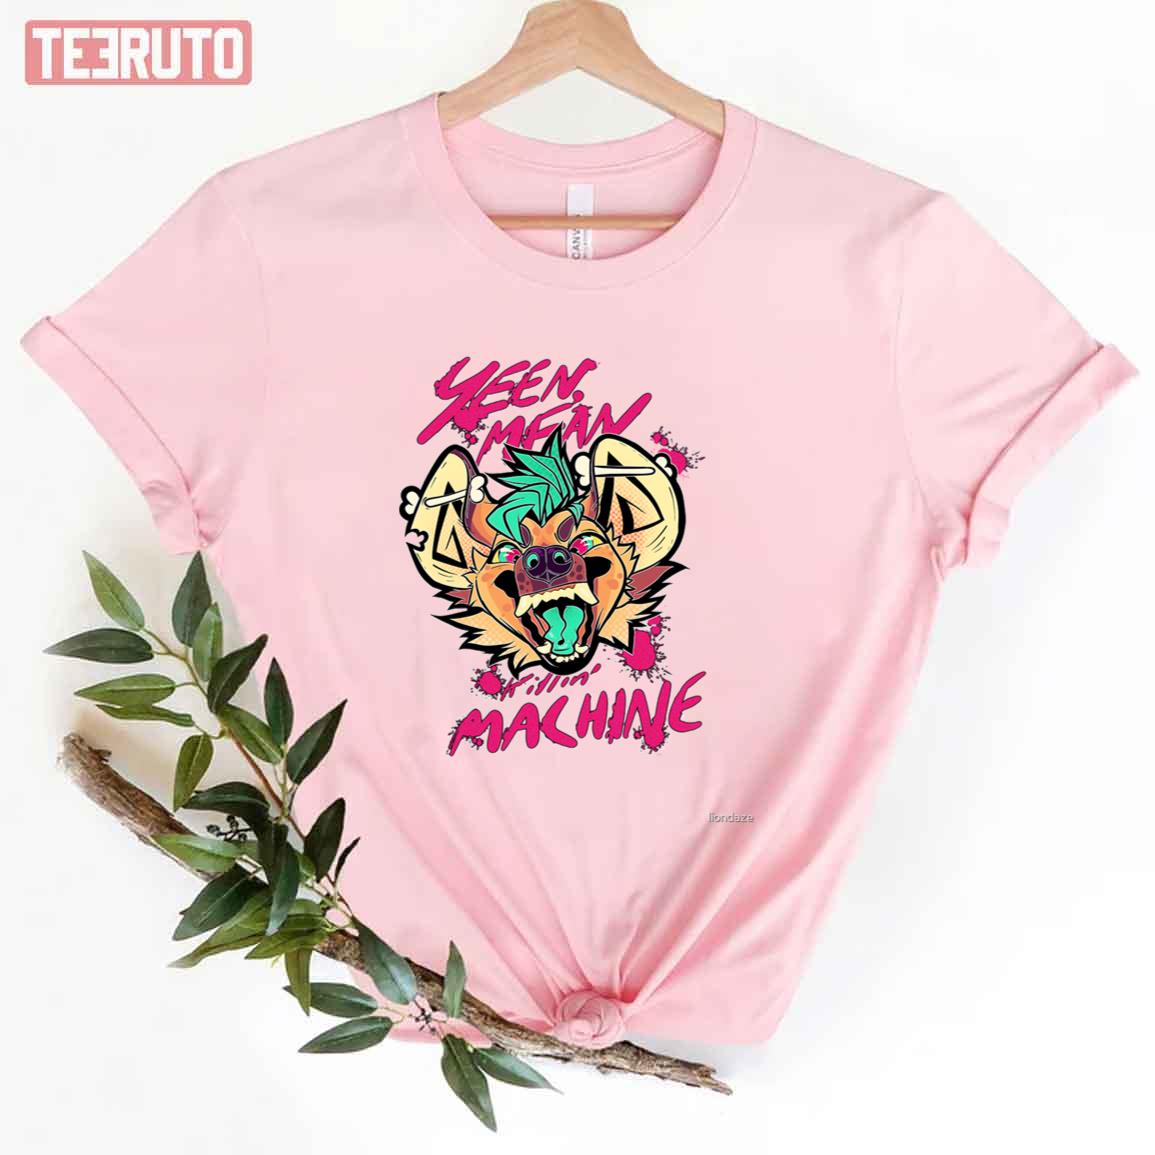 Yeen Mean Killin' Machine Unisex T-Shirt